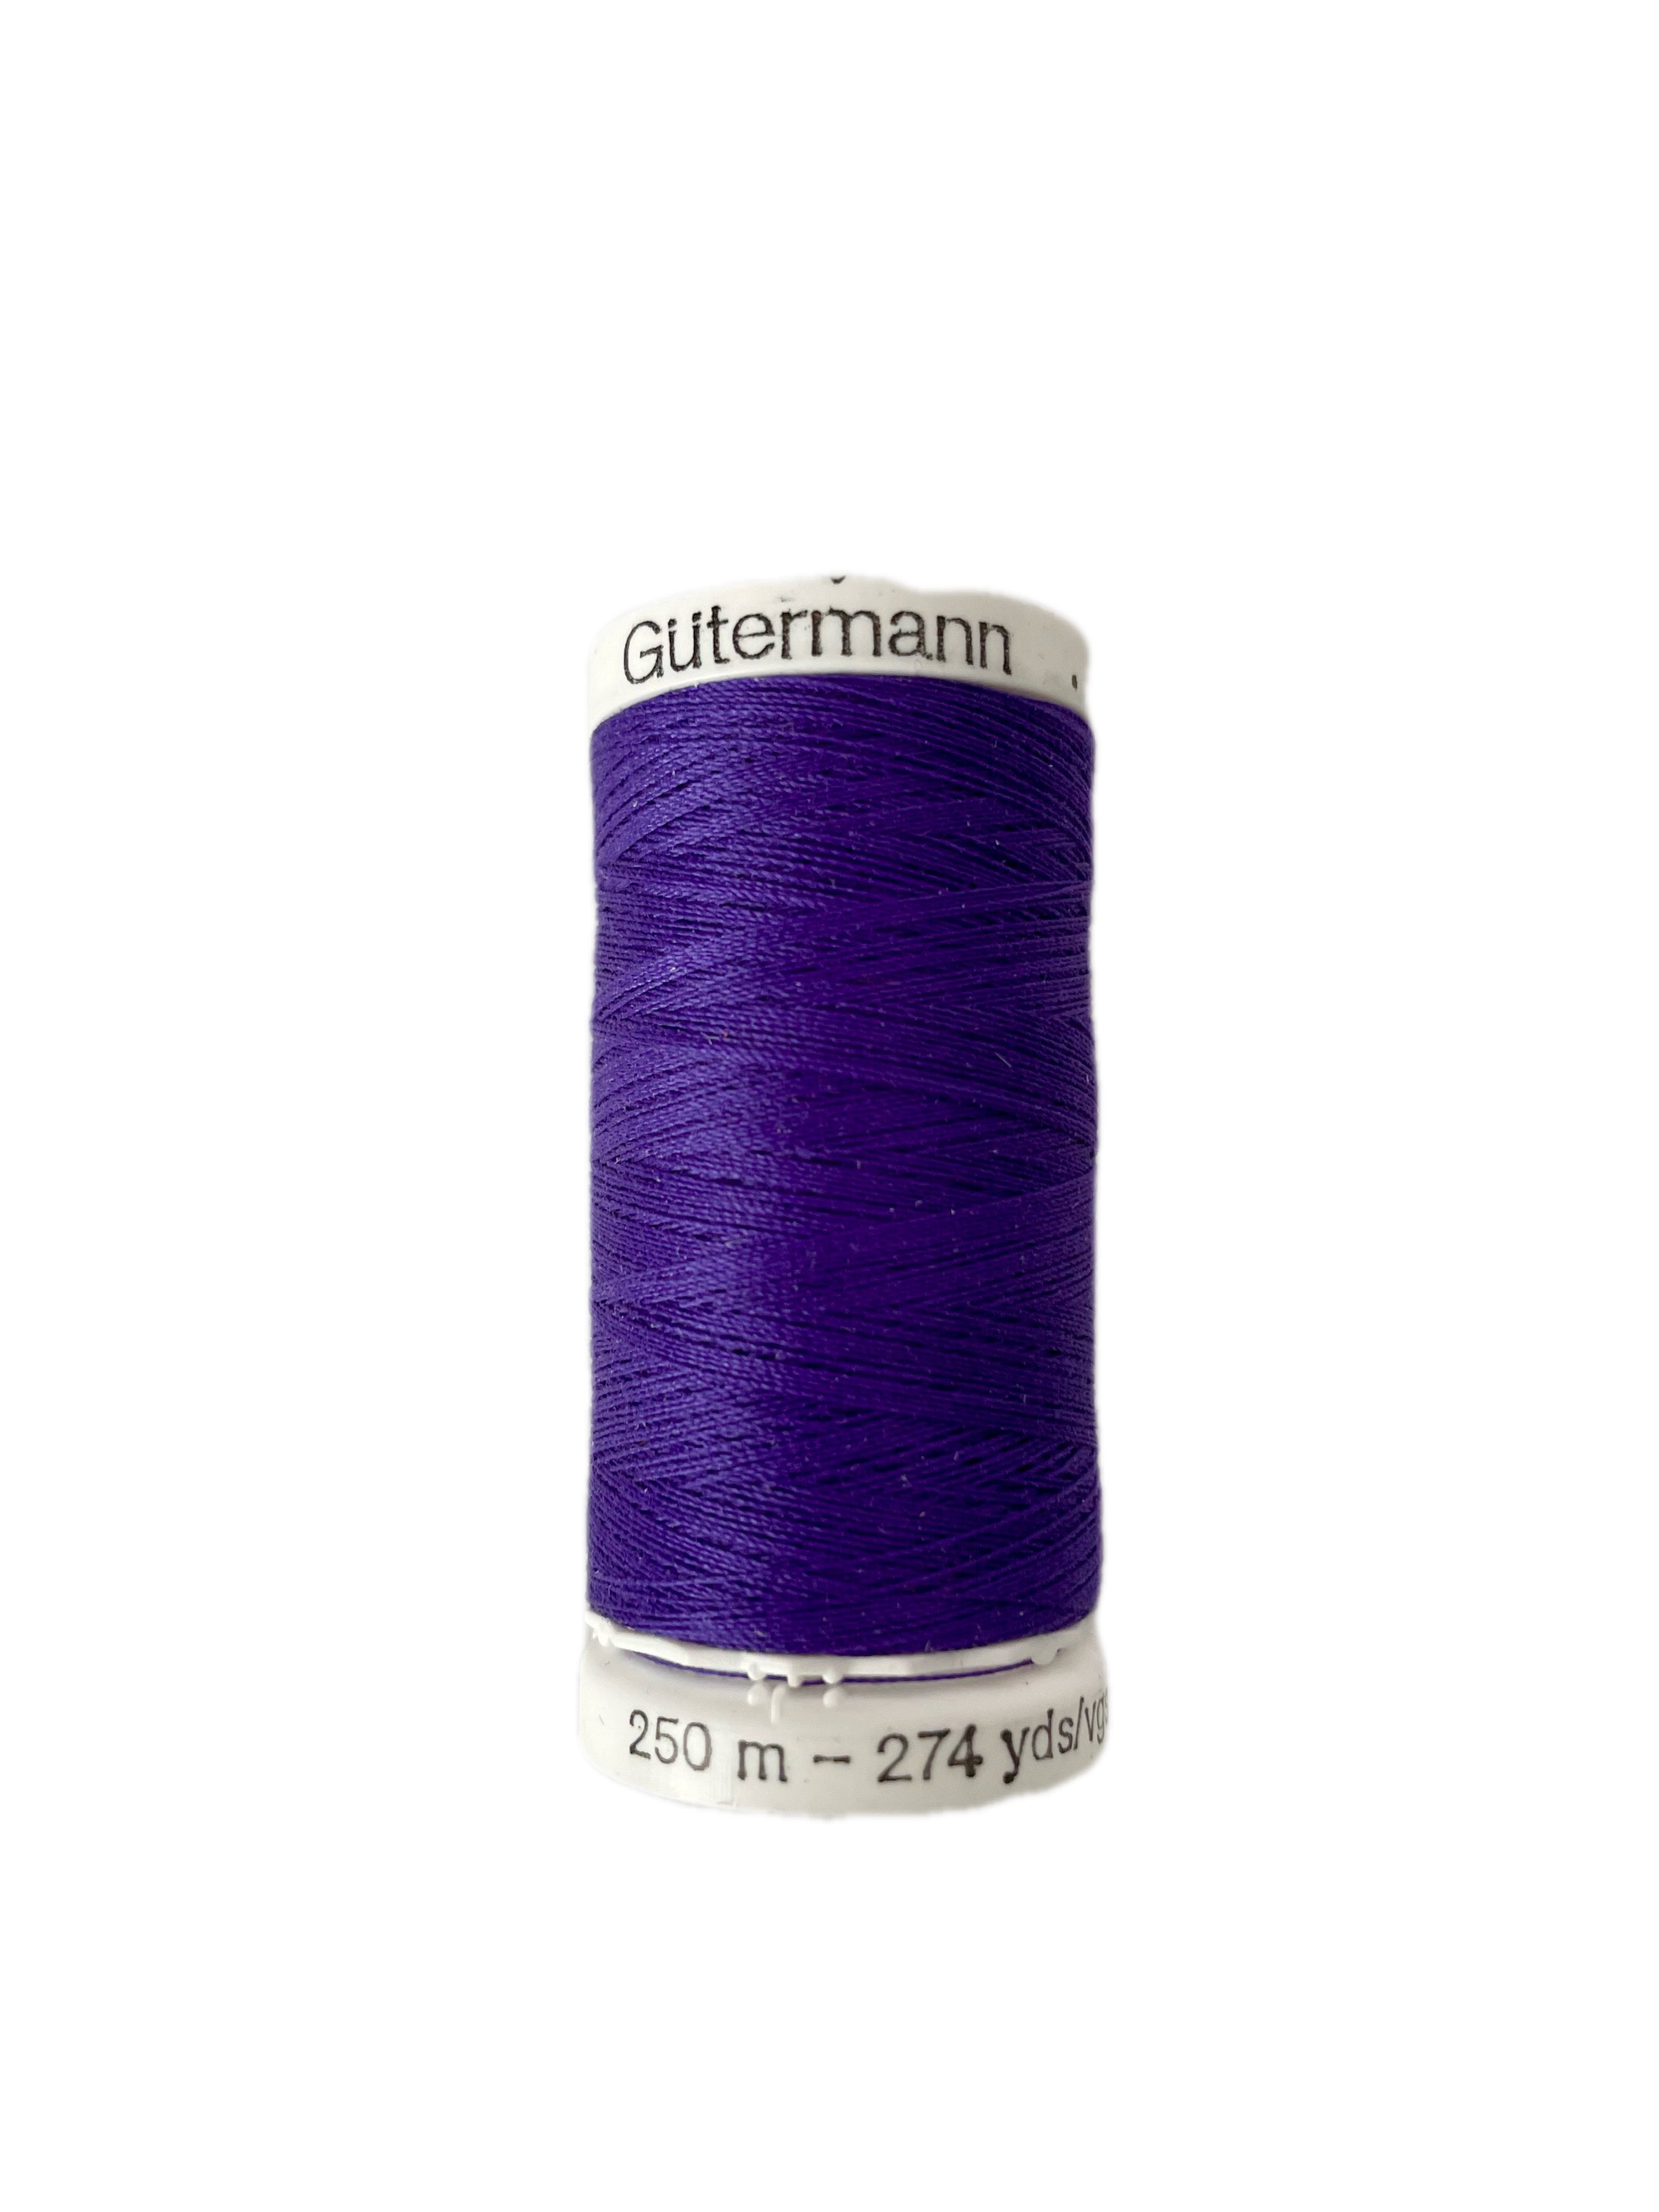 Gutermann Sew All Thread